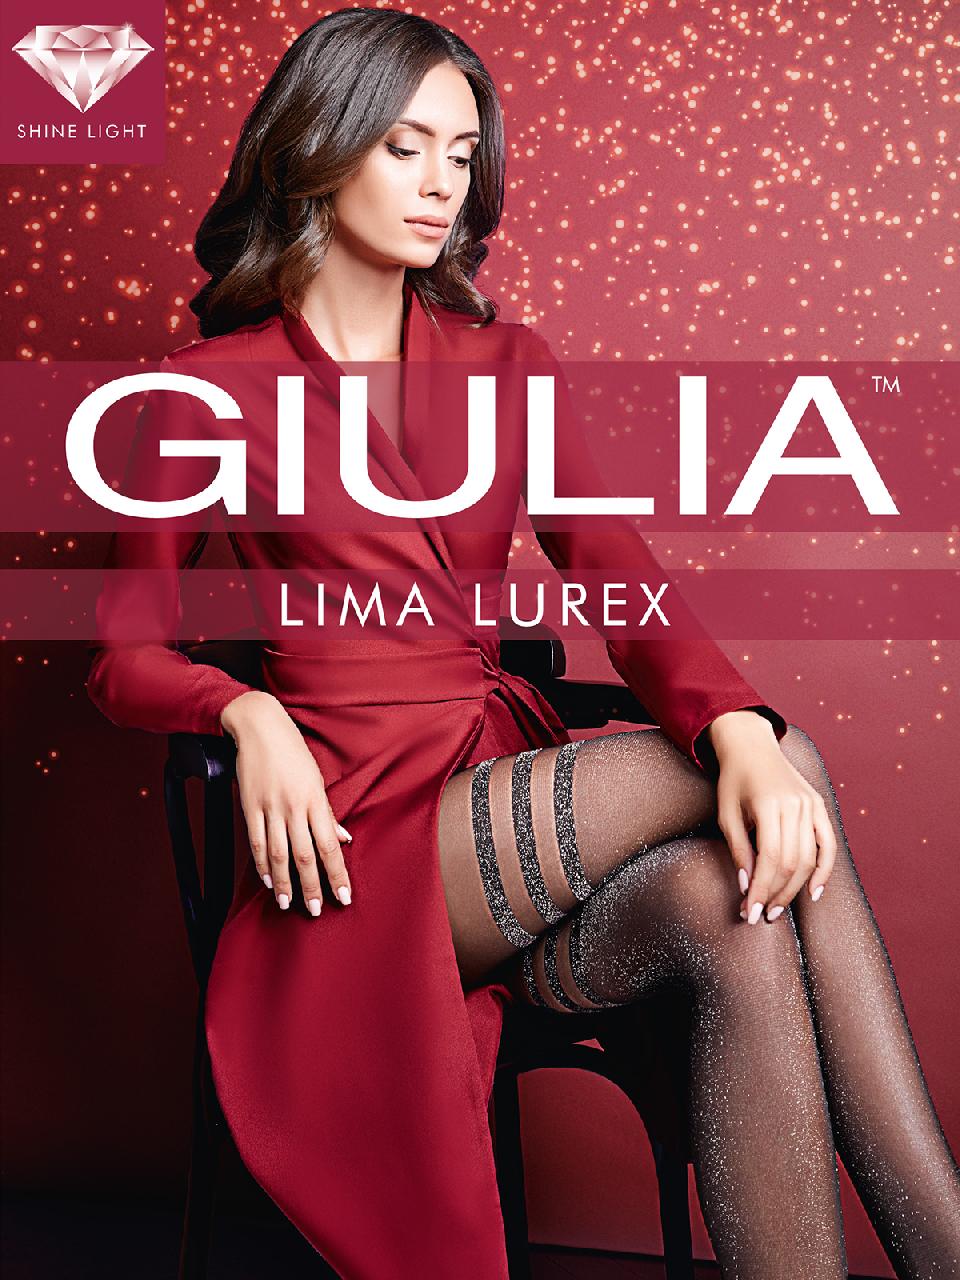 Giulia Lima Lurex 02 nero 4